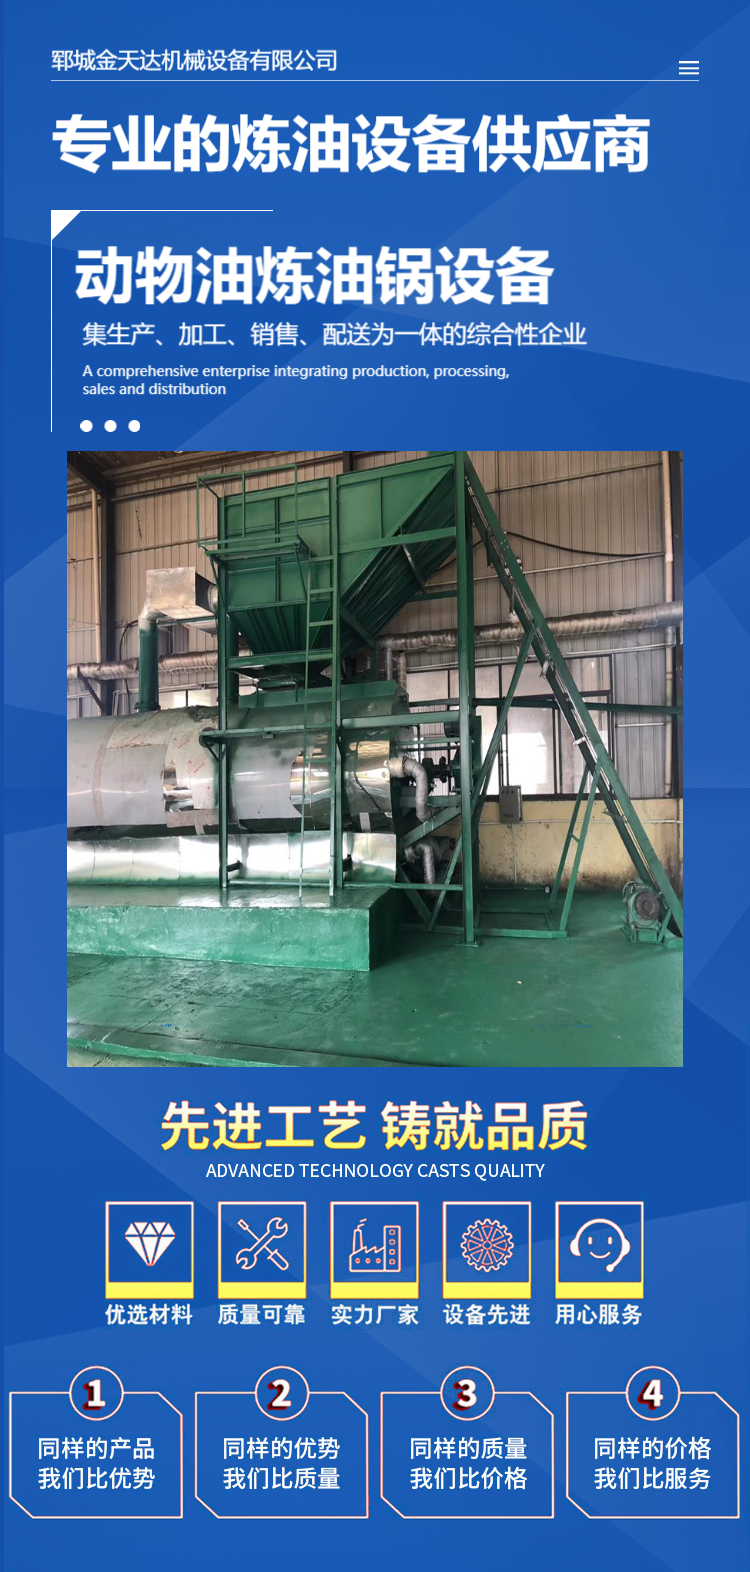 Jintianda 1 ton fully enclosed refining equipment boiler plate material - high oil yield